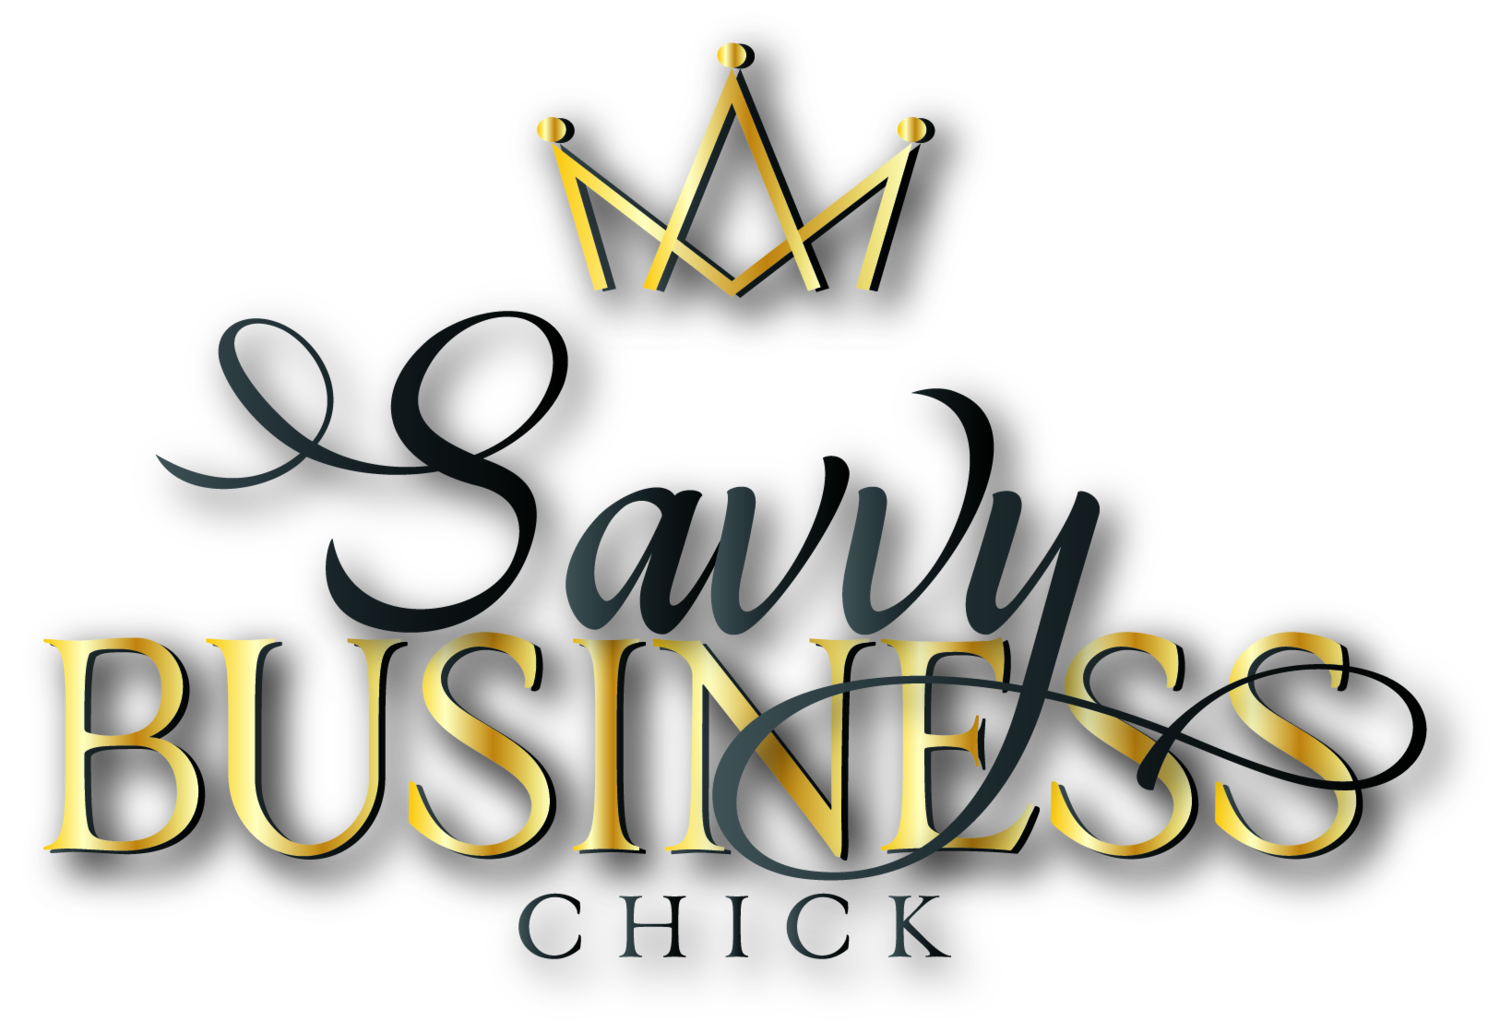 Savvy Business Chick